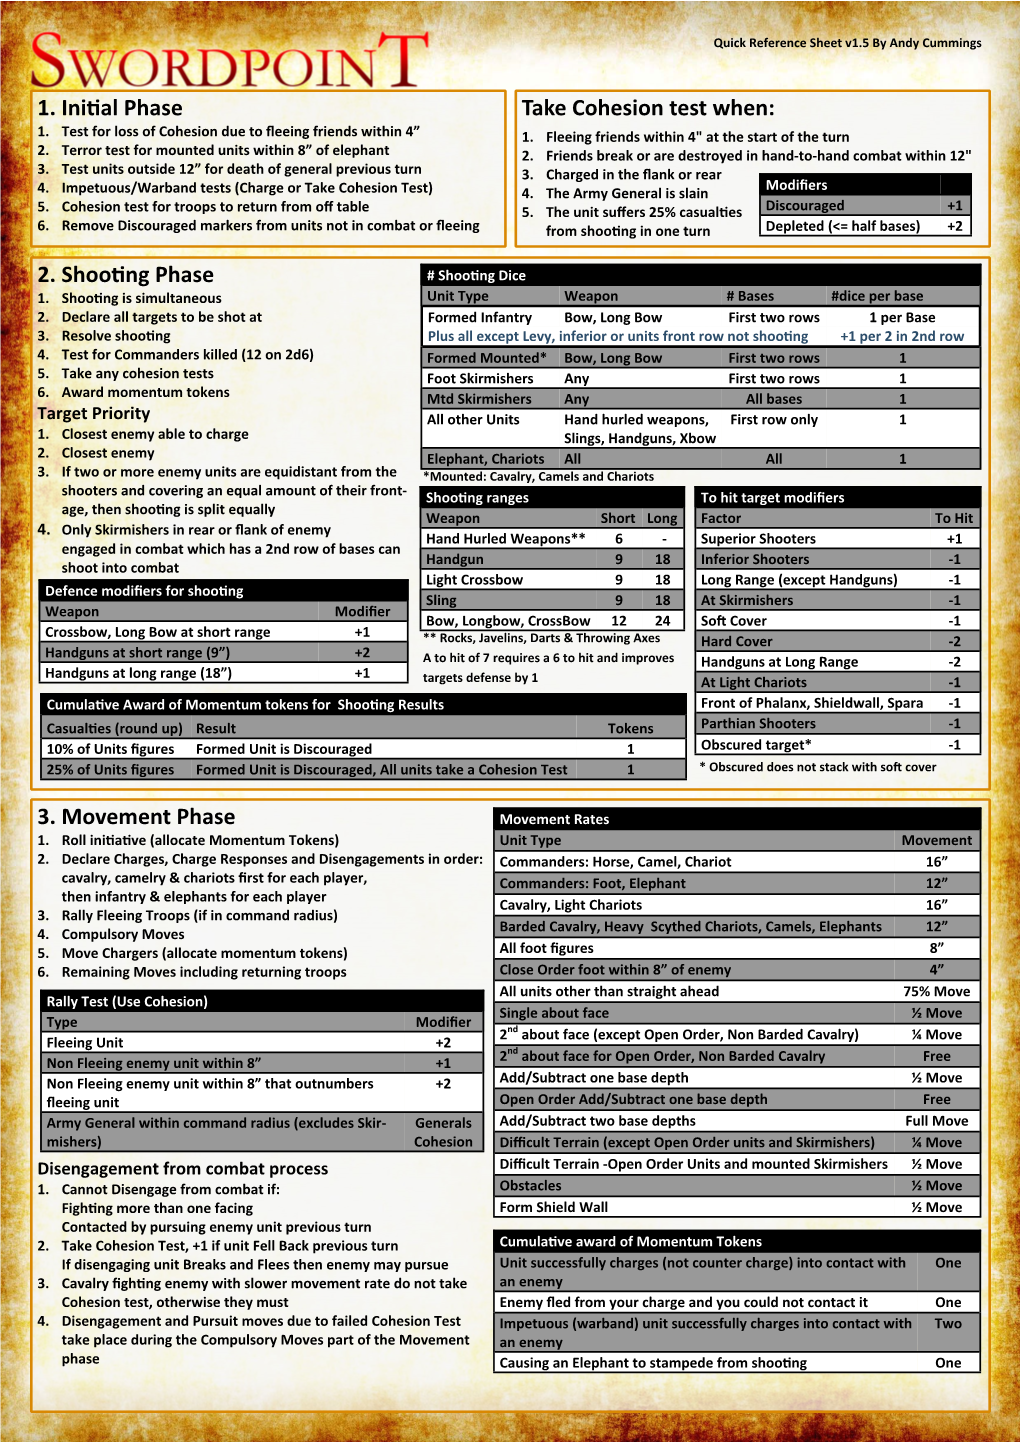 Swordpoint Quick Reference Sheet V1.5